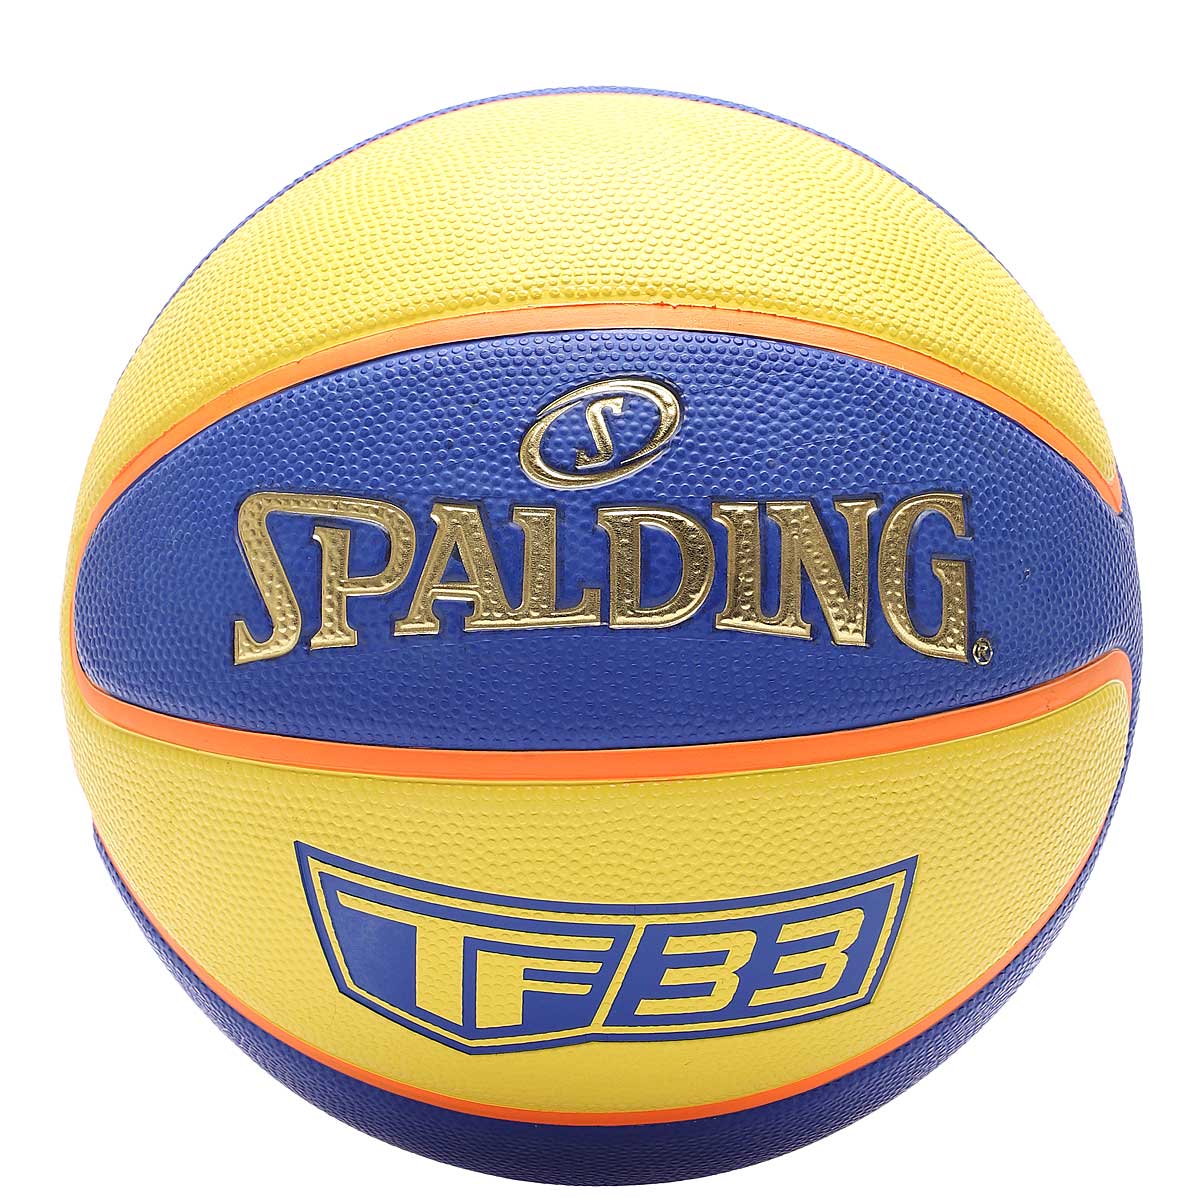 Spalding Tf 3X3 Basketball, Blue/Yellow